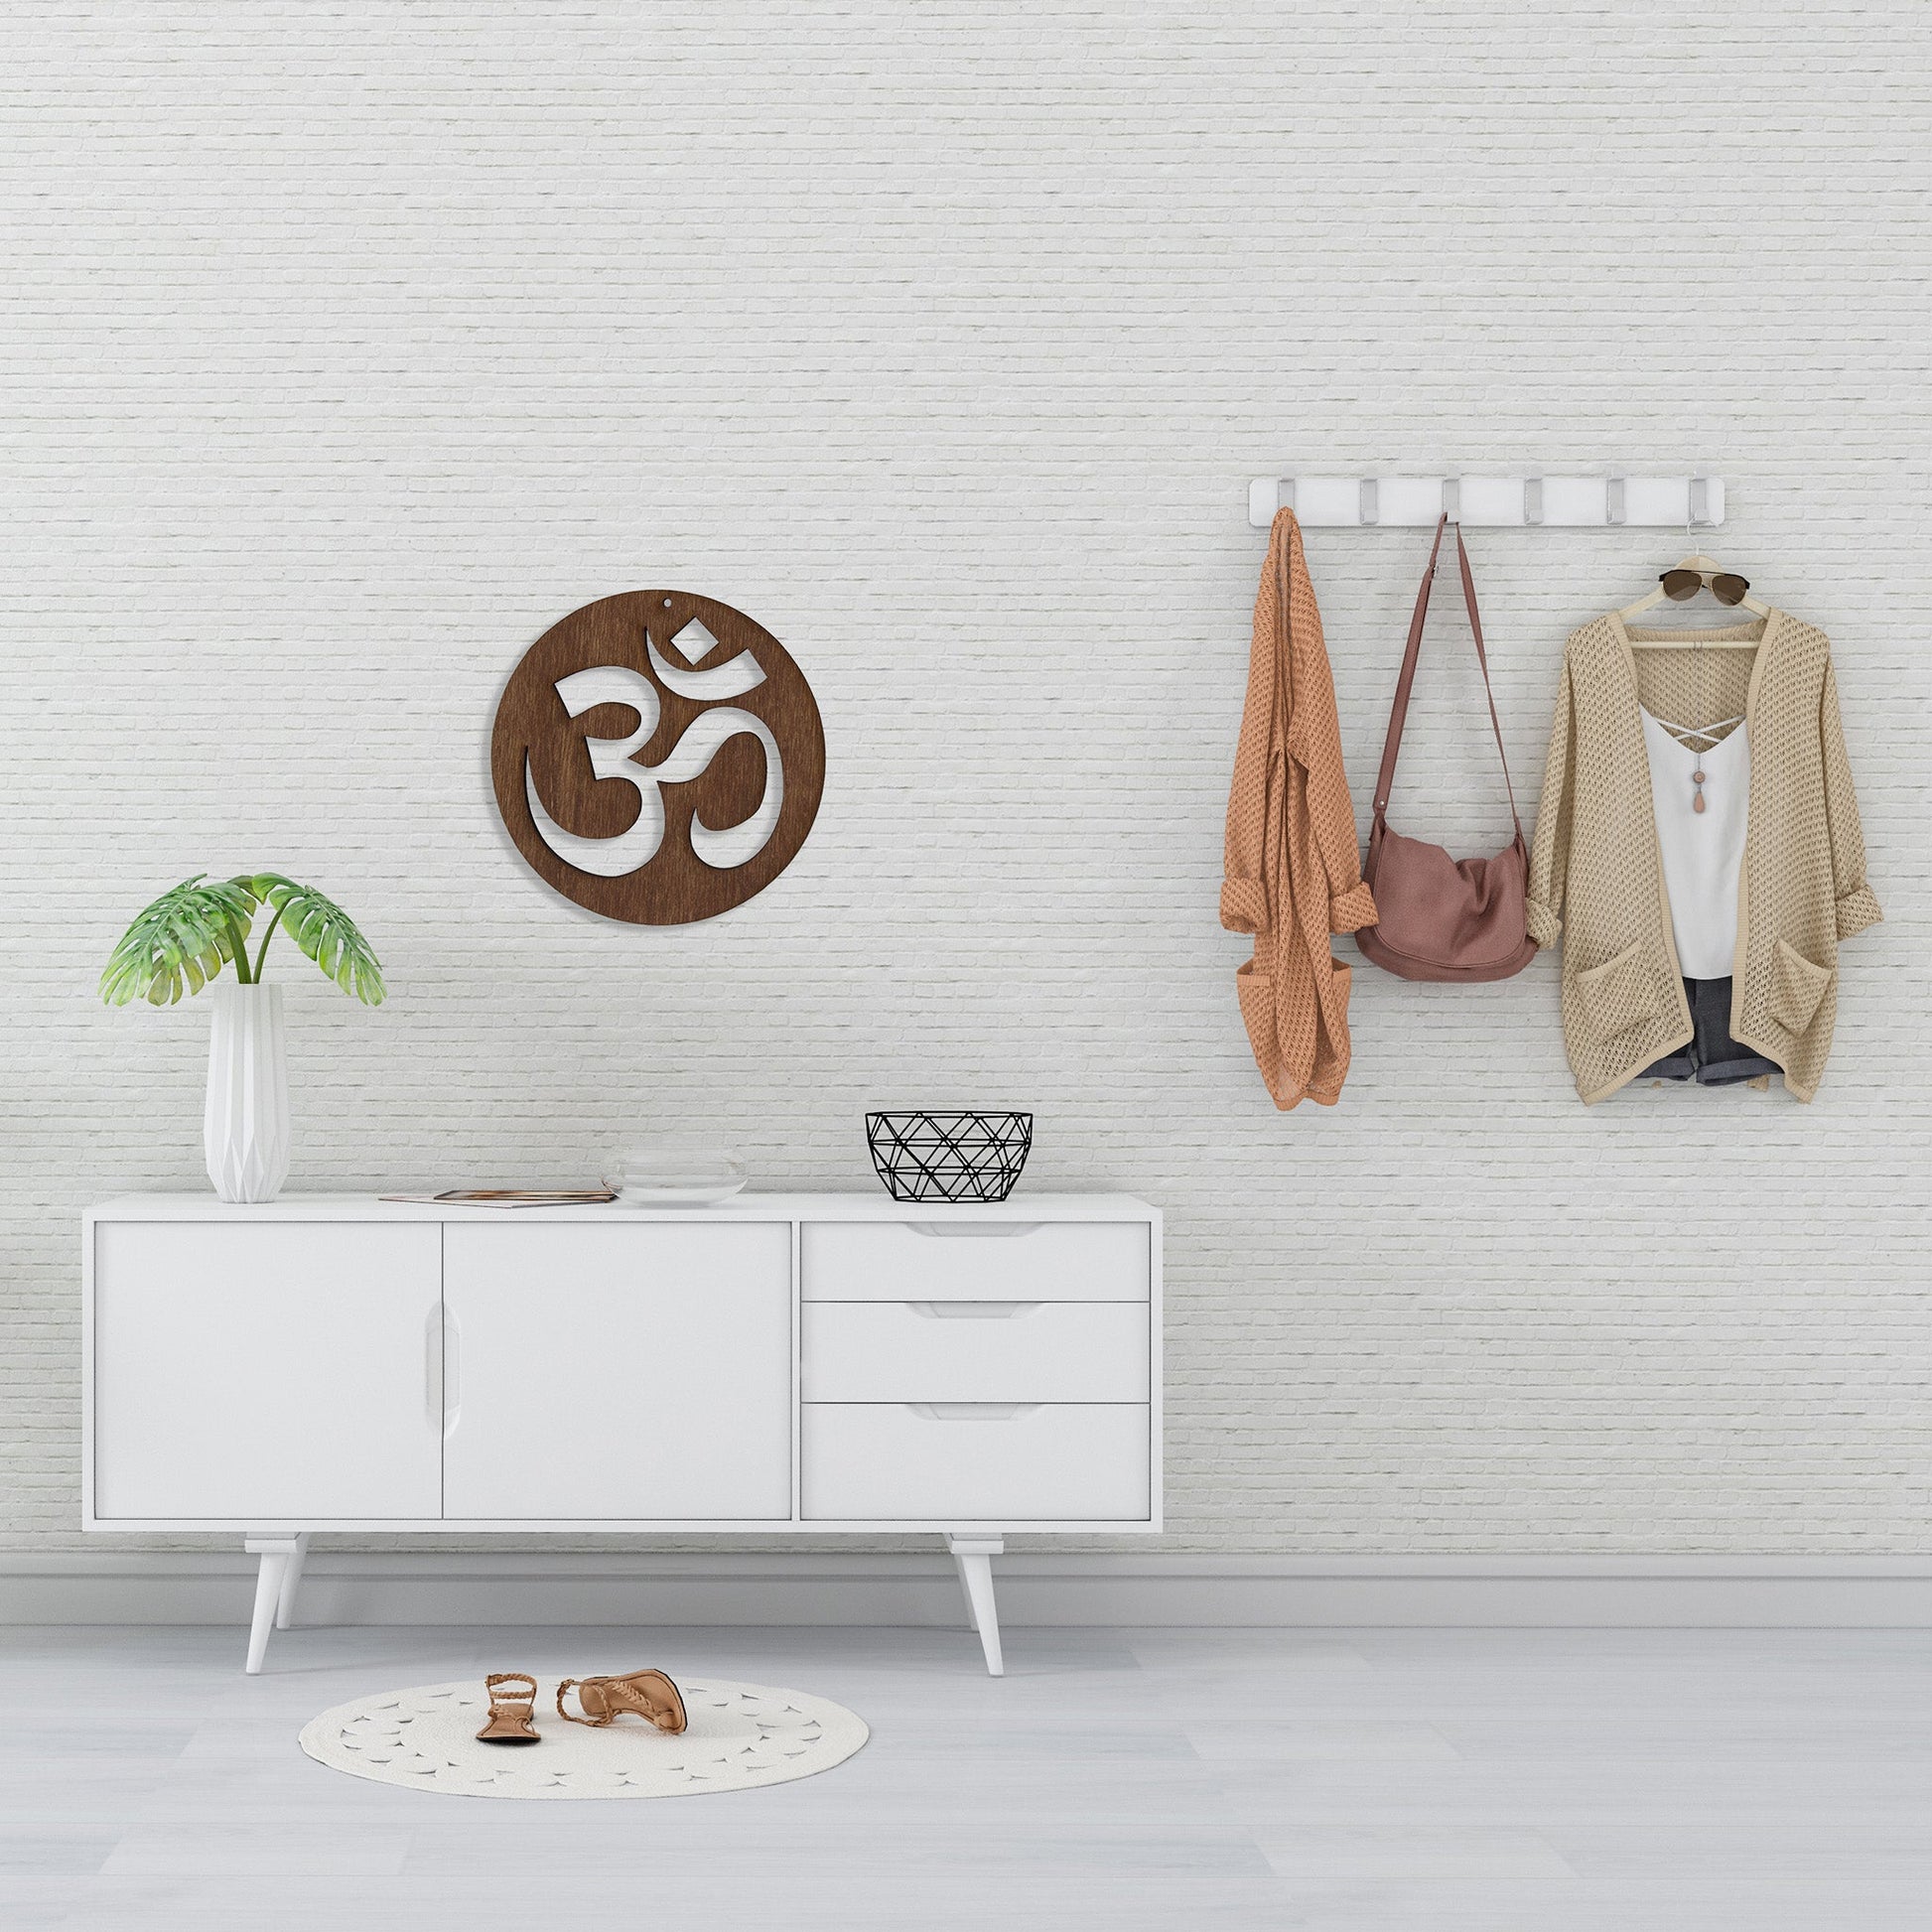 Wandbild Holz "OM" - Nanino Design Onlineshop -